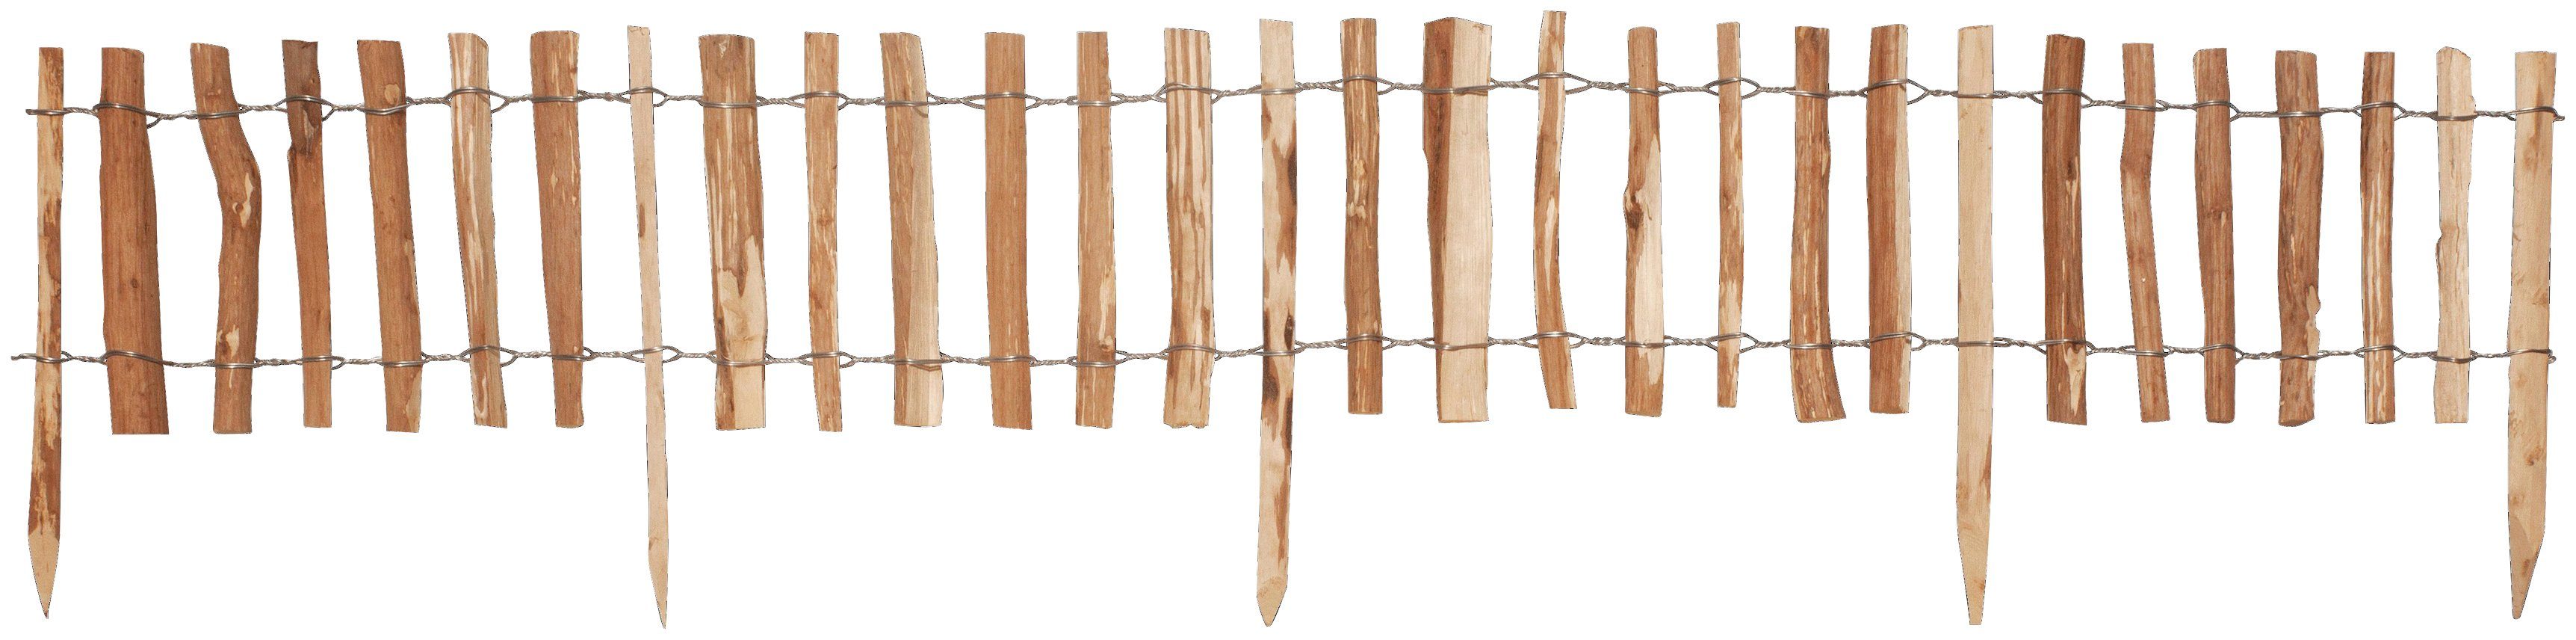 Kiehn-Holz Beetumrandung Mini-Haselnuss-Beetgrenze, LxH: 200x28 cm, Abstand 3-4 cm